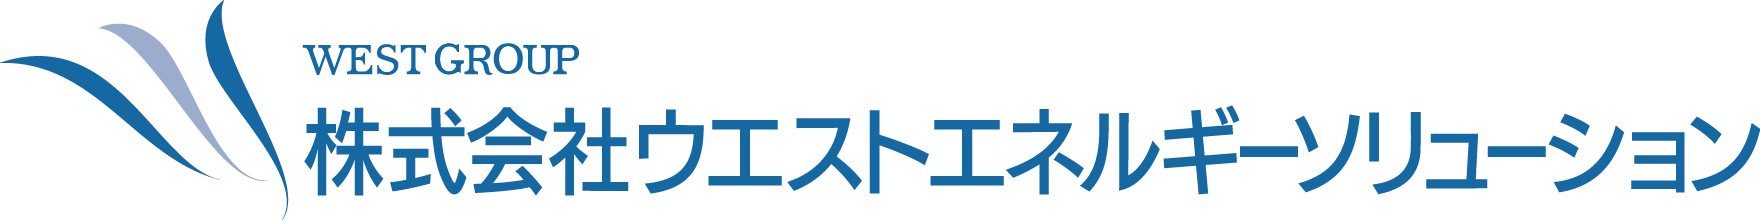 WES_和文logo.png